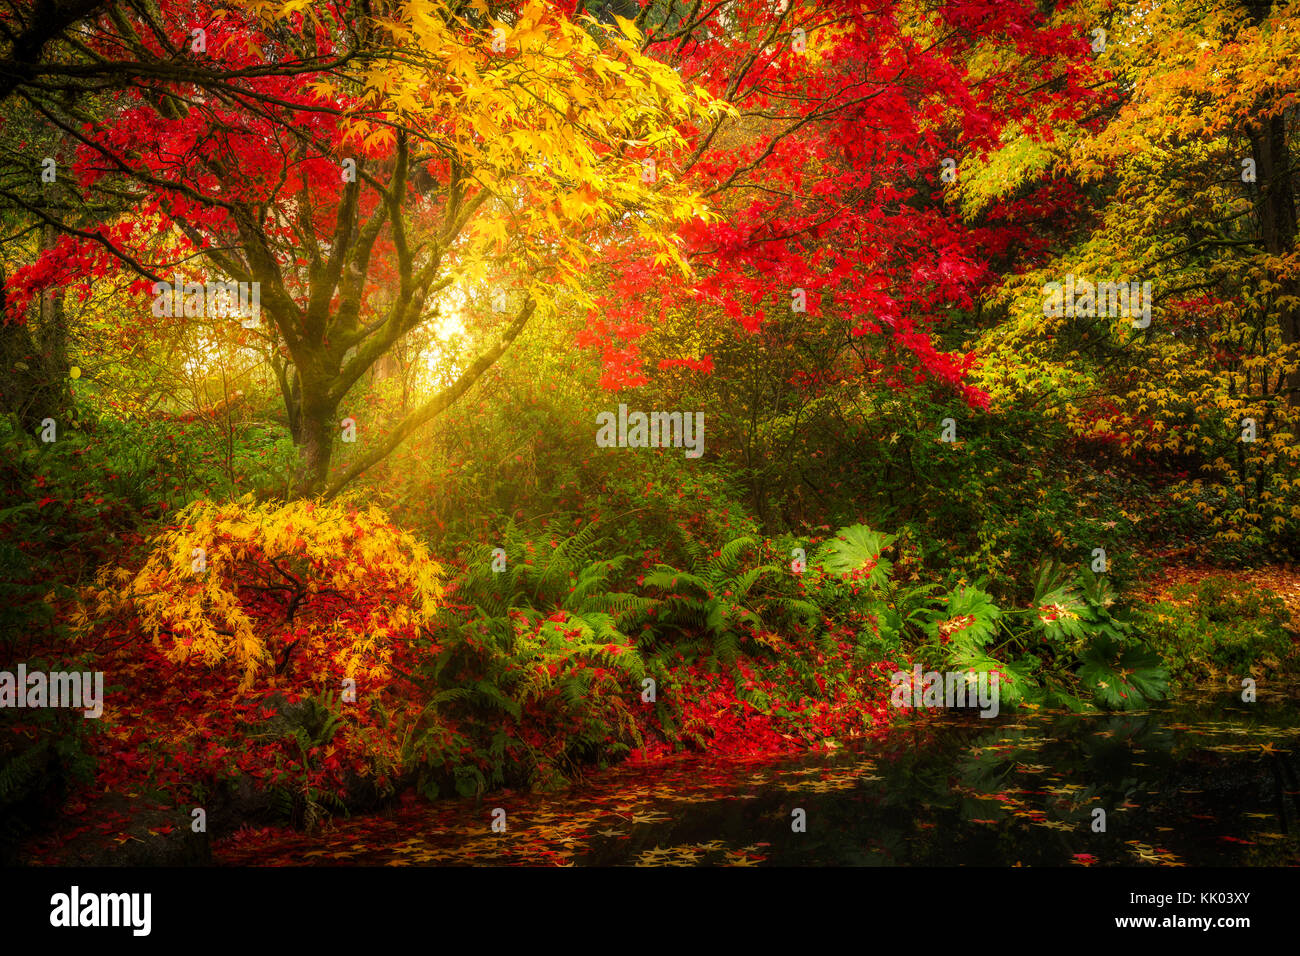 Dreamy fall foliage landscape in Seattle's Washington Park Arboretum botanical Garden Stock Photo